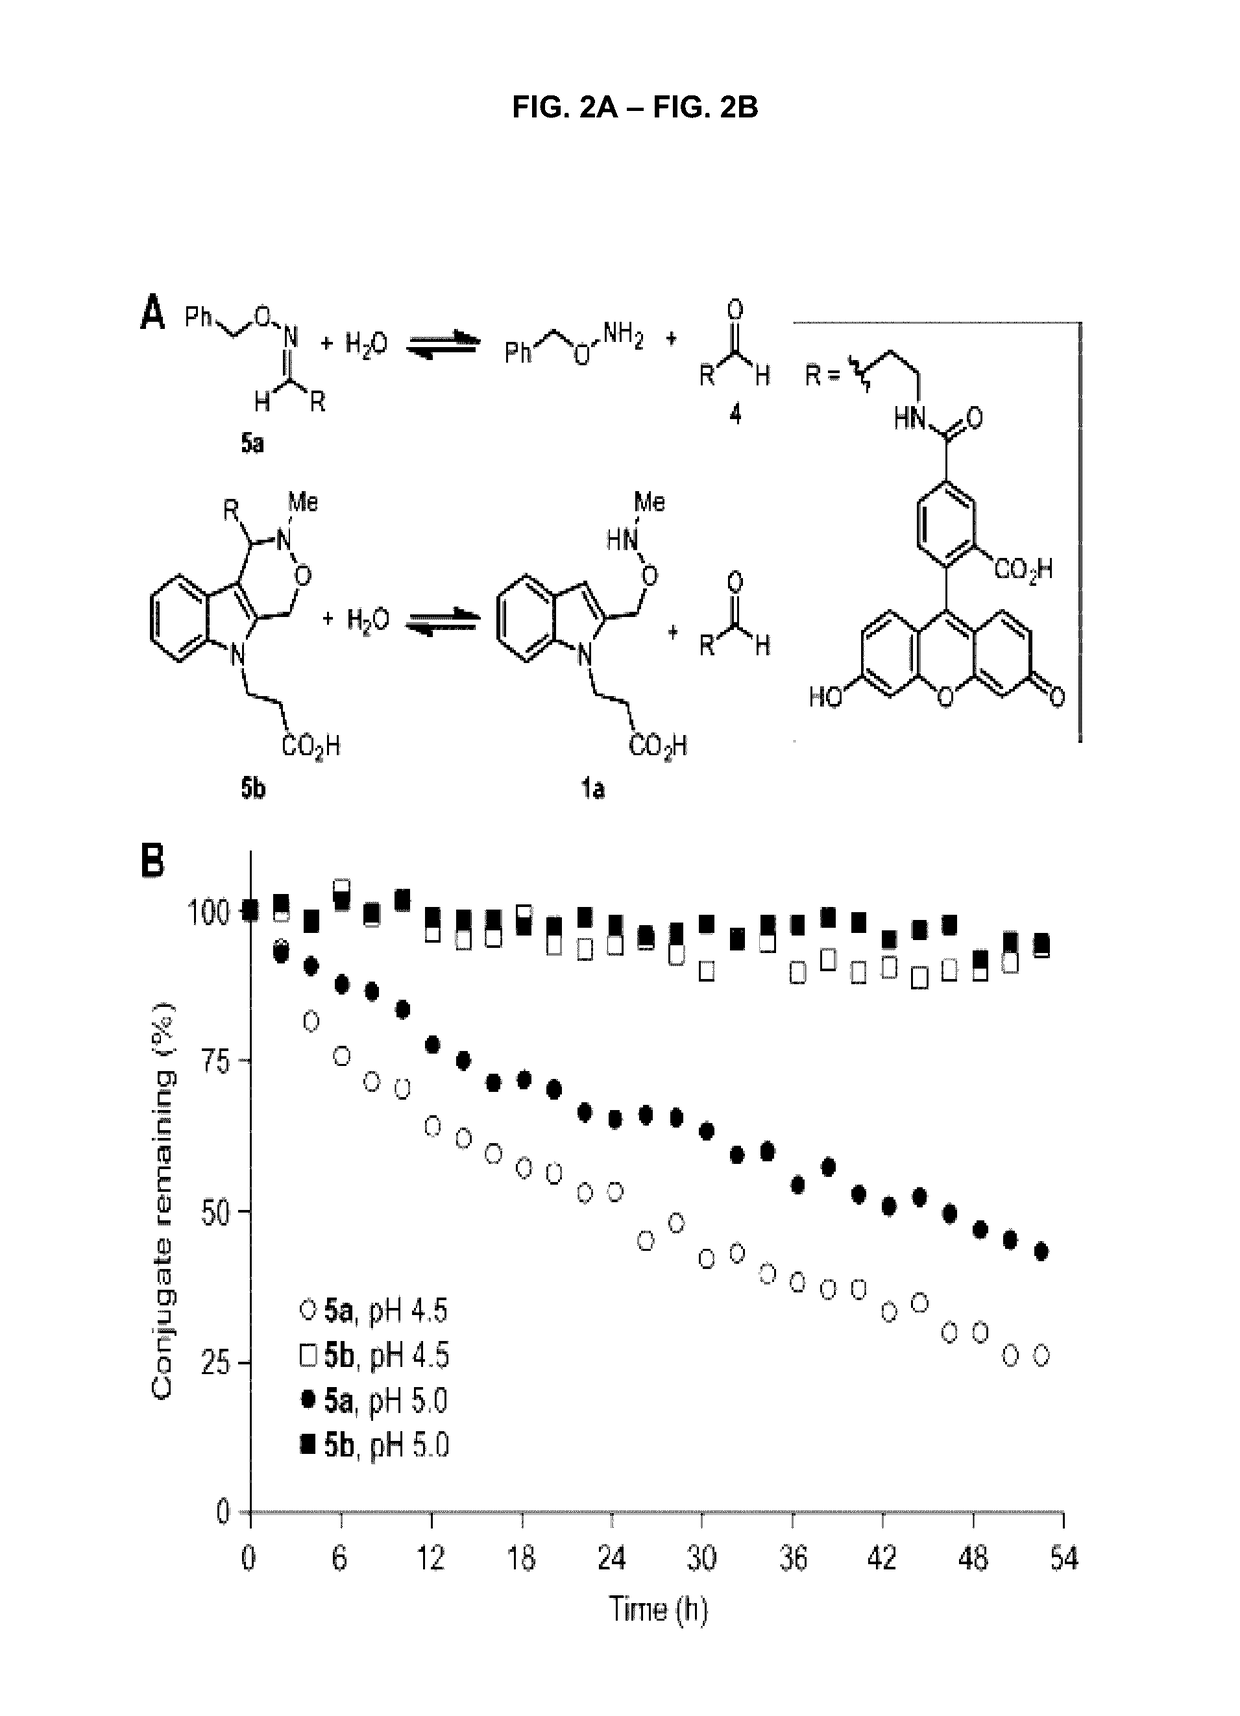 Pictet-Spengler ligation for protein chemical modification